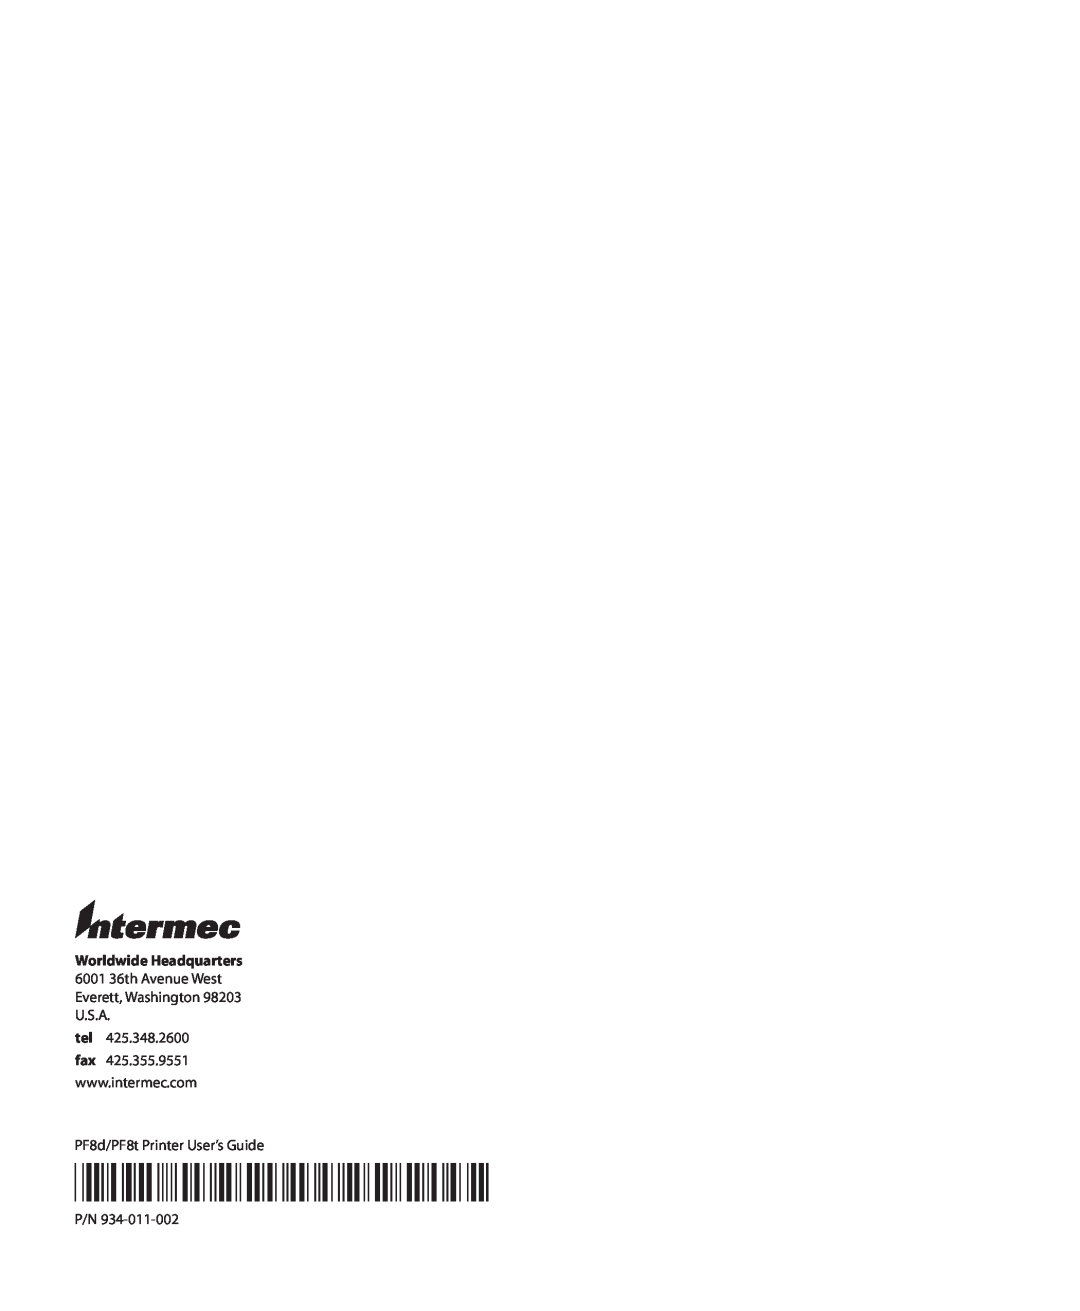 Intermec PF8T, PF8D manual 934-011-002, PF8d/PF8t Printer User’s Guide 